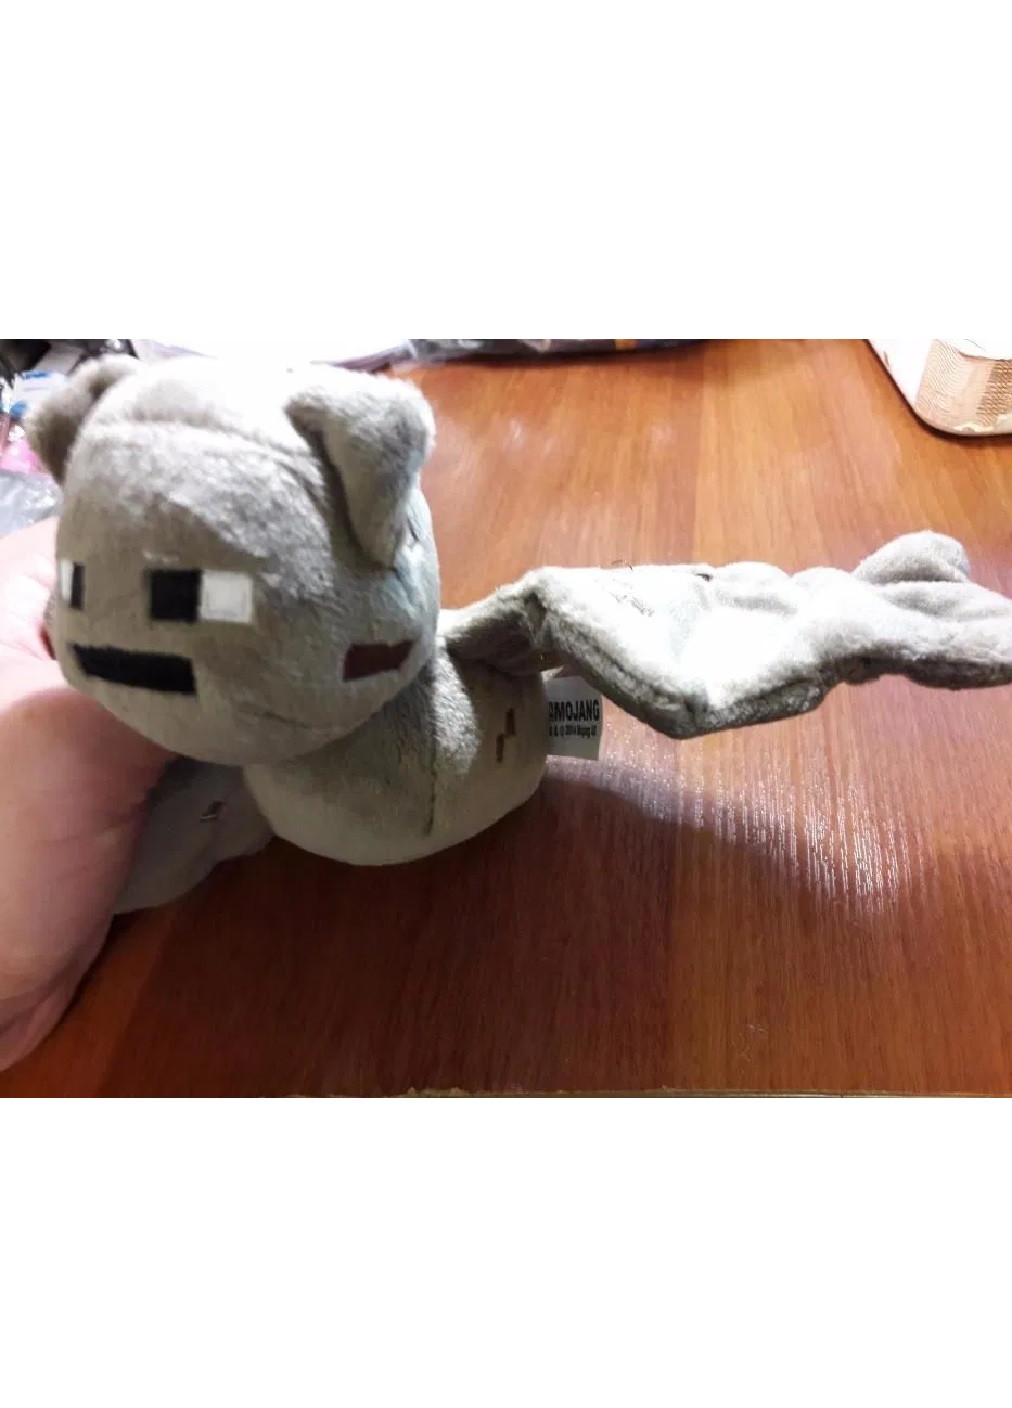 Мягкая детская плюшевая игрушка летучая мышь из игры майнкрафт 16х29 см (474129-Prob) Unbranded (257411211)